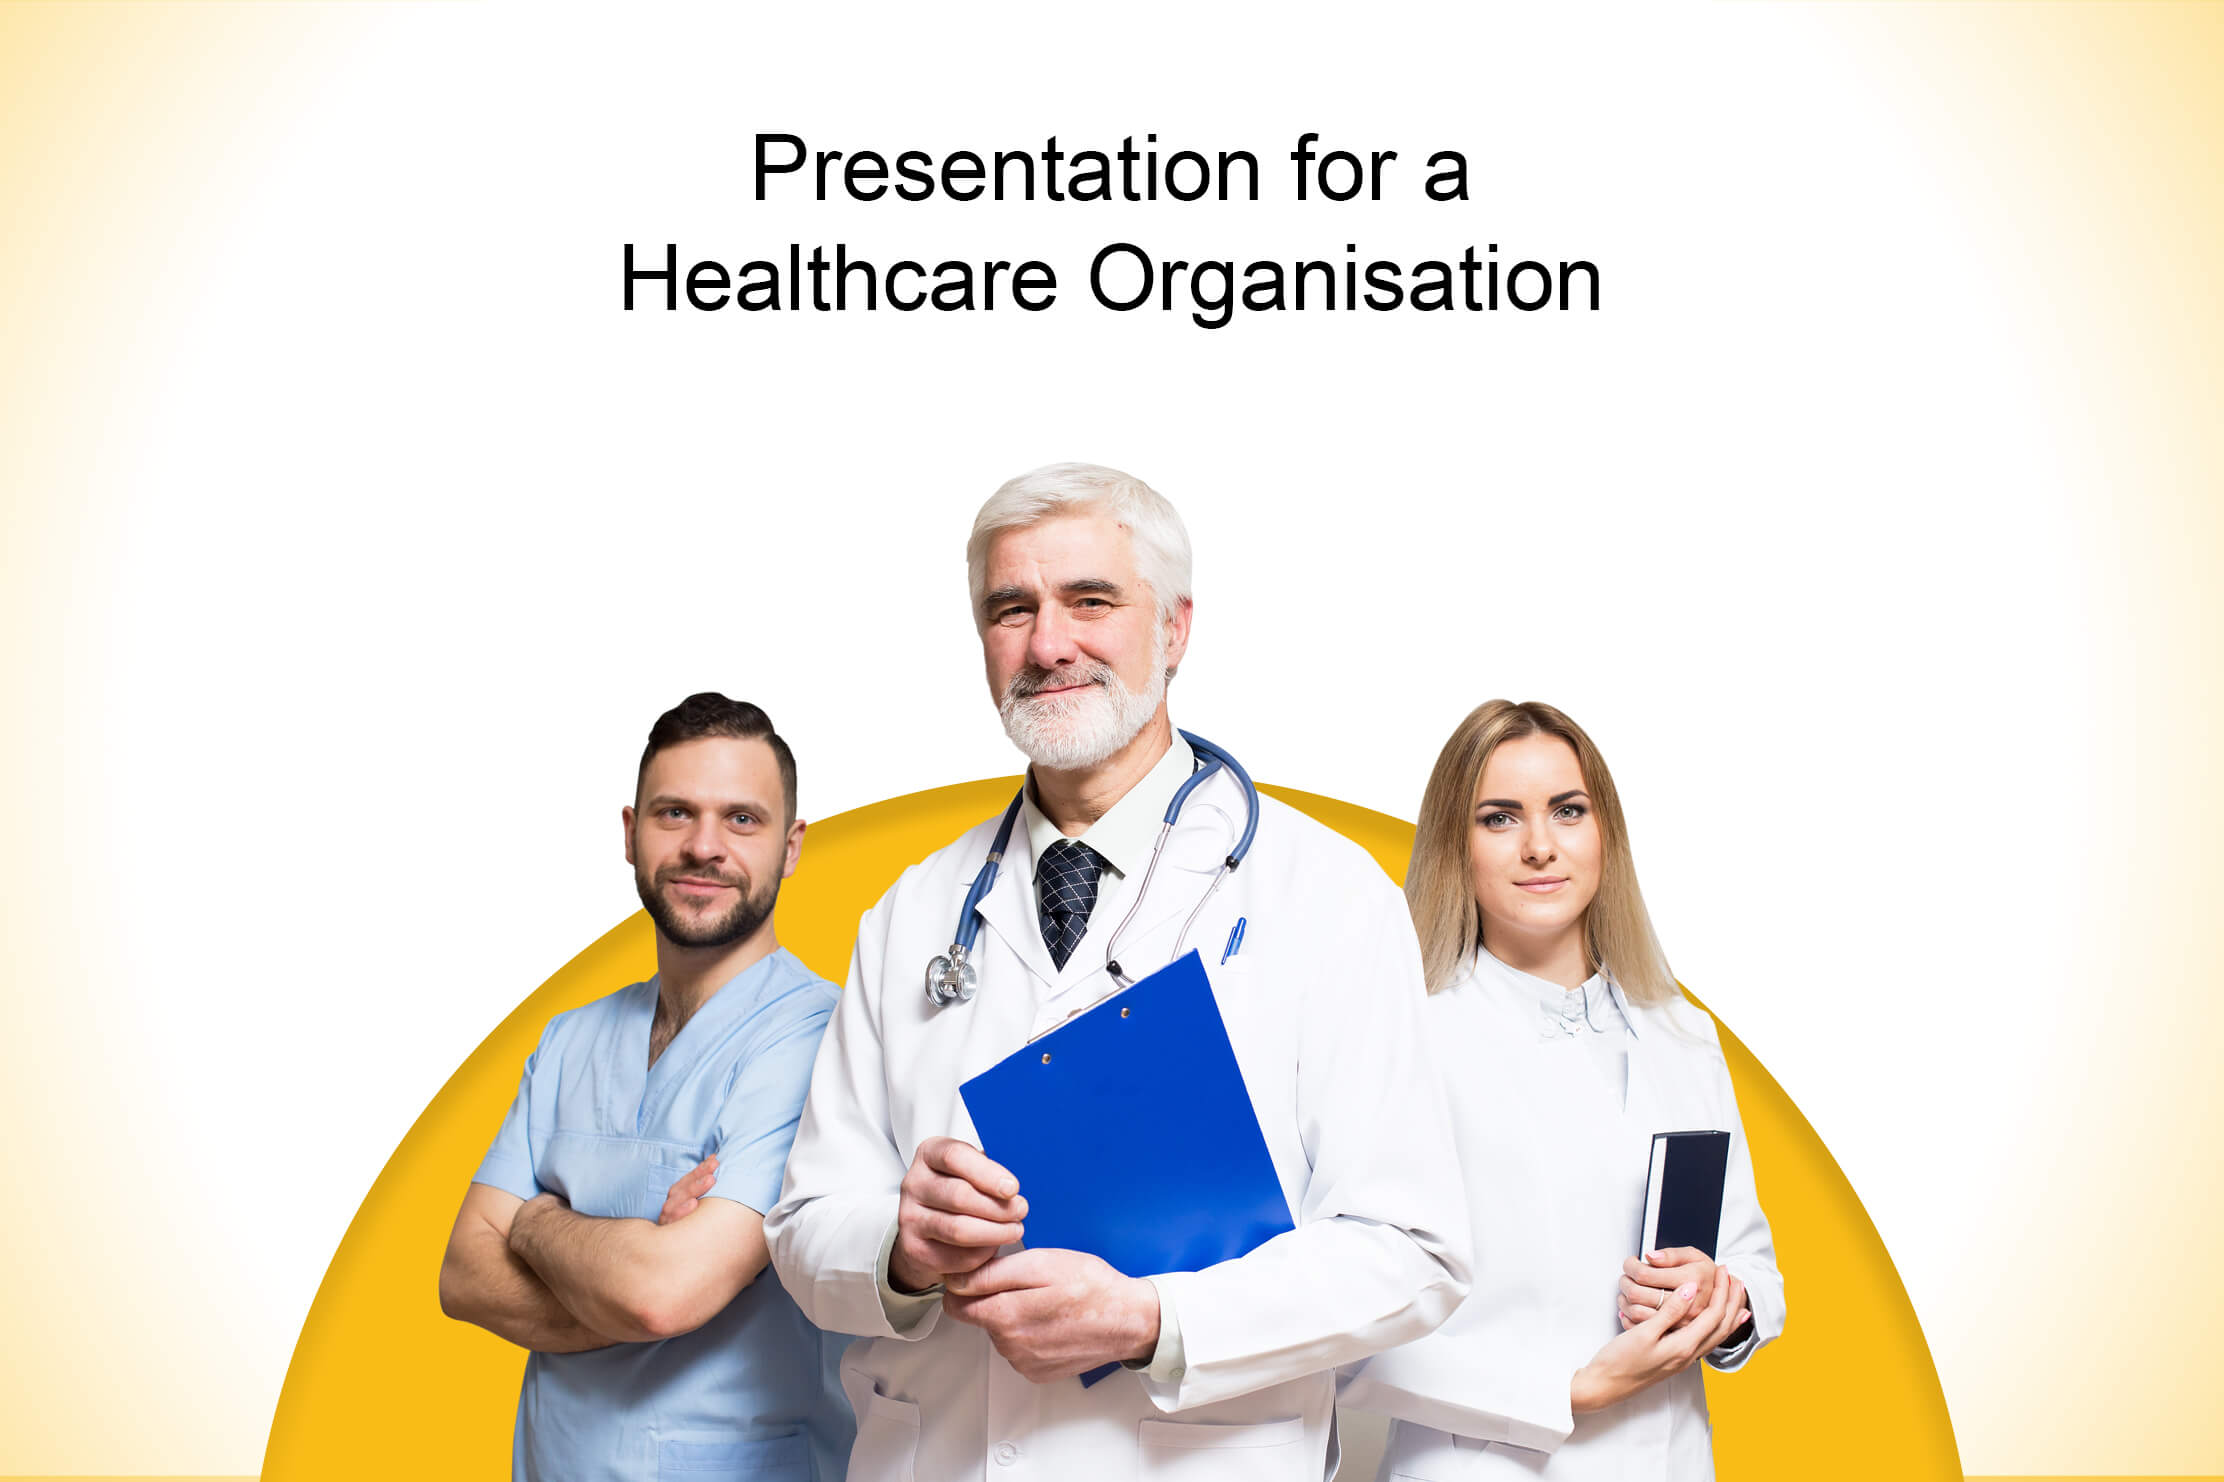 Presentation for Healthcare Organization